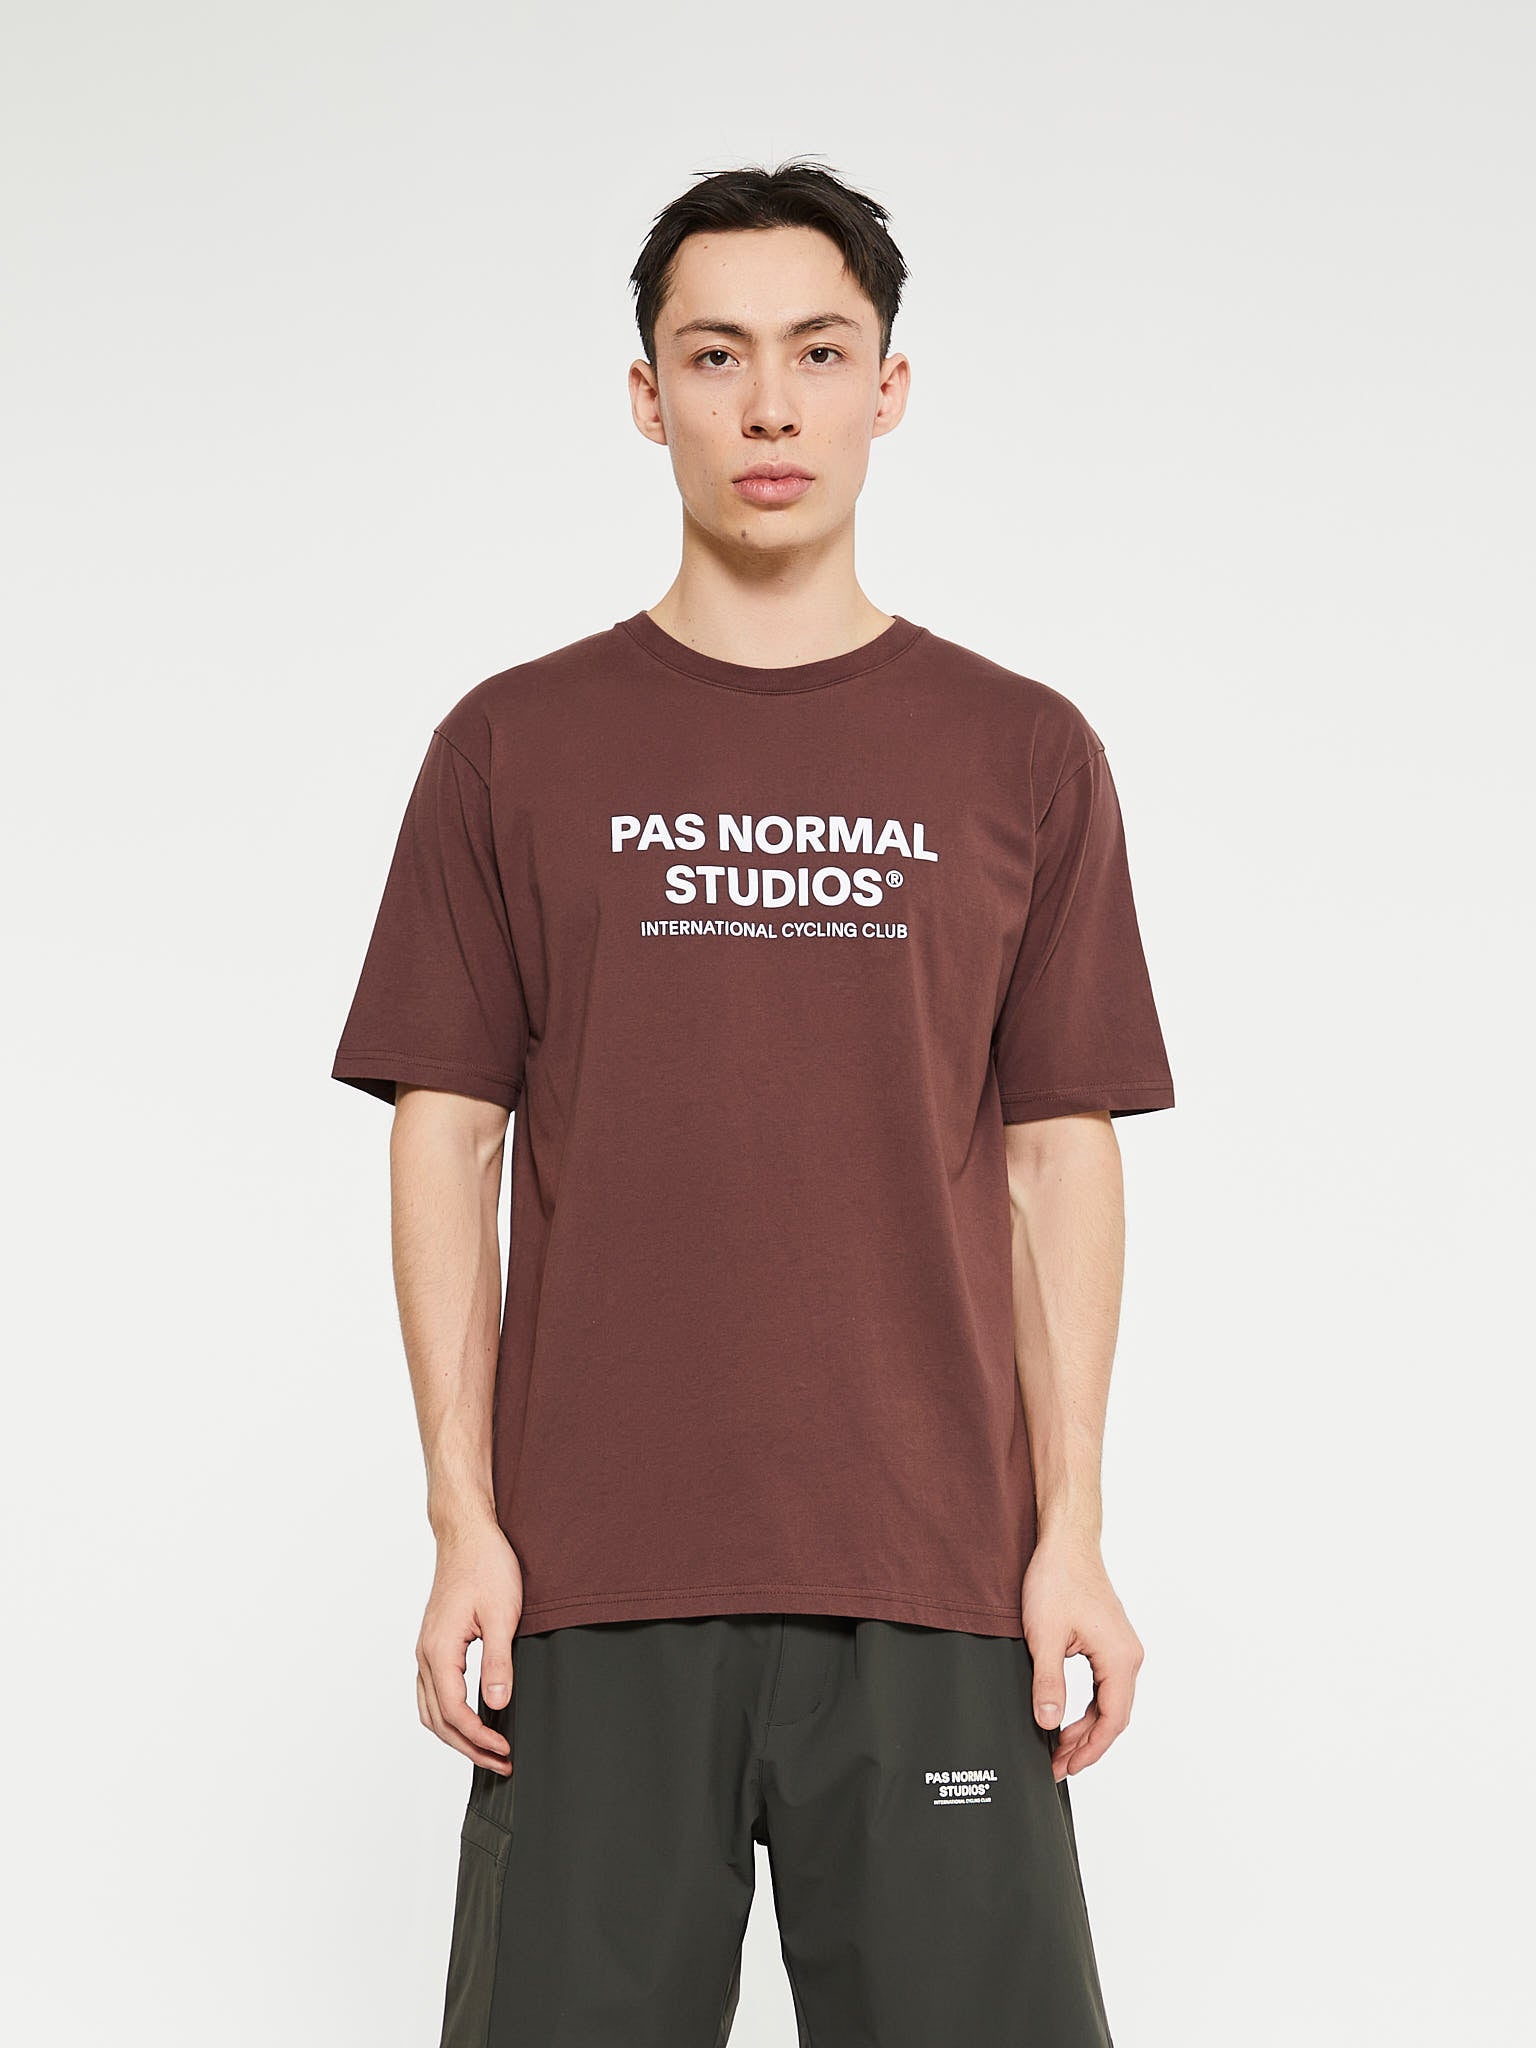 Pas Normal Studios - Off-Race Logo T-shirt in Deep Brown